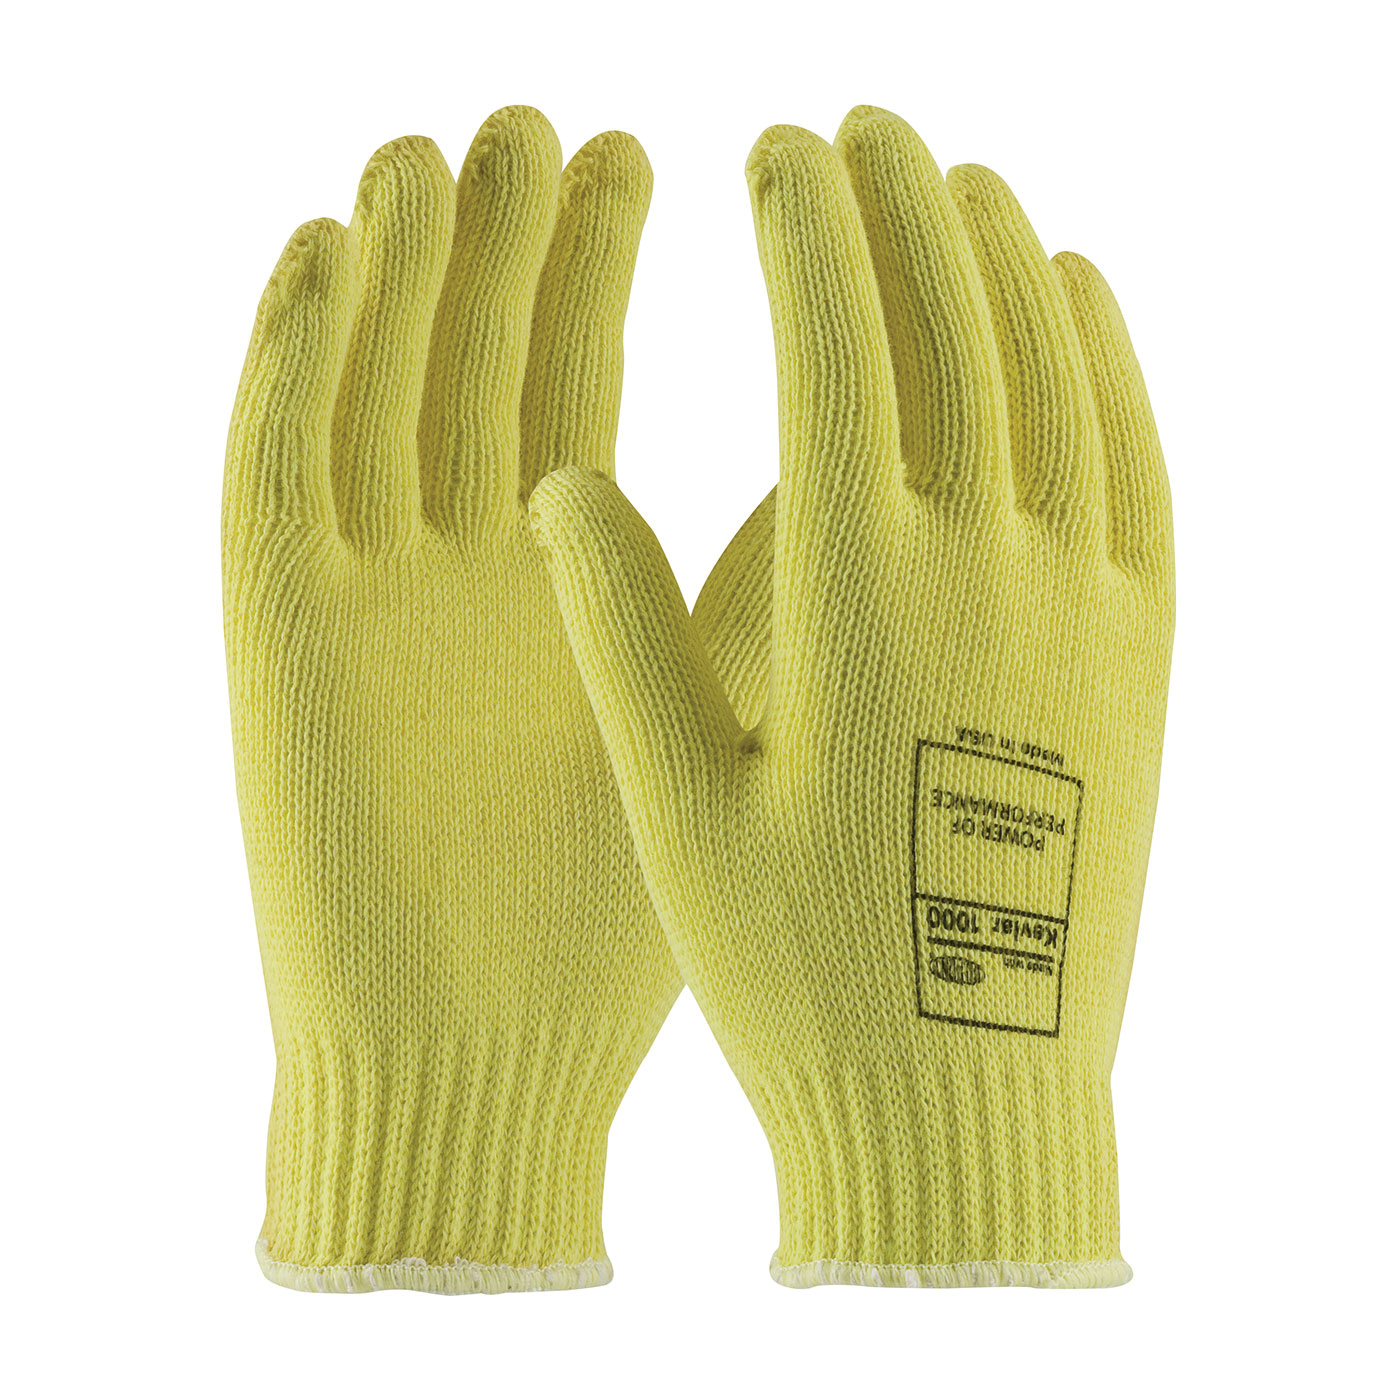 PIP® Kut-Gard® 07-K200/L Lightweight Unisex Cut Resistant Gloves, L, Uncoated Coating, DuPont™ Kevlar® Fiber, Elastic/Knit Wrist Cuff, Resists: Cut, Heat and Flame, ANSI Cut-Resistance Level: A2